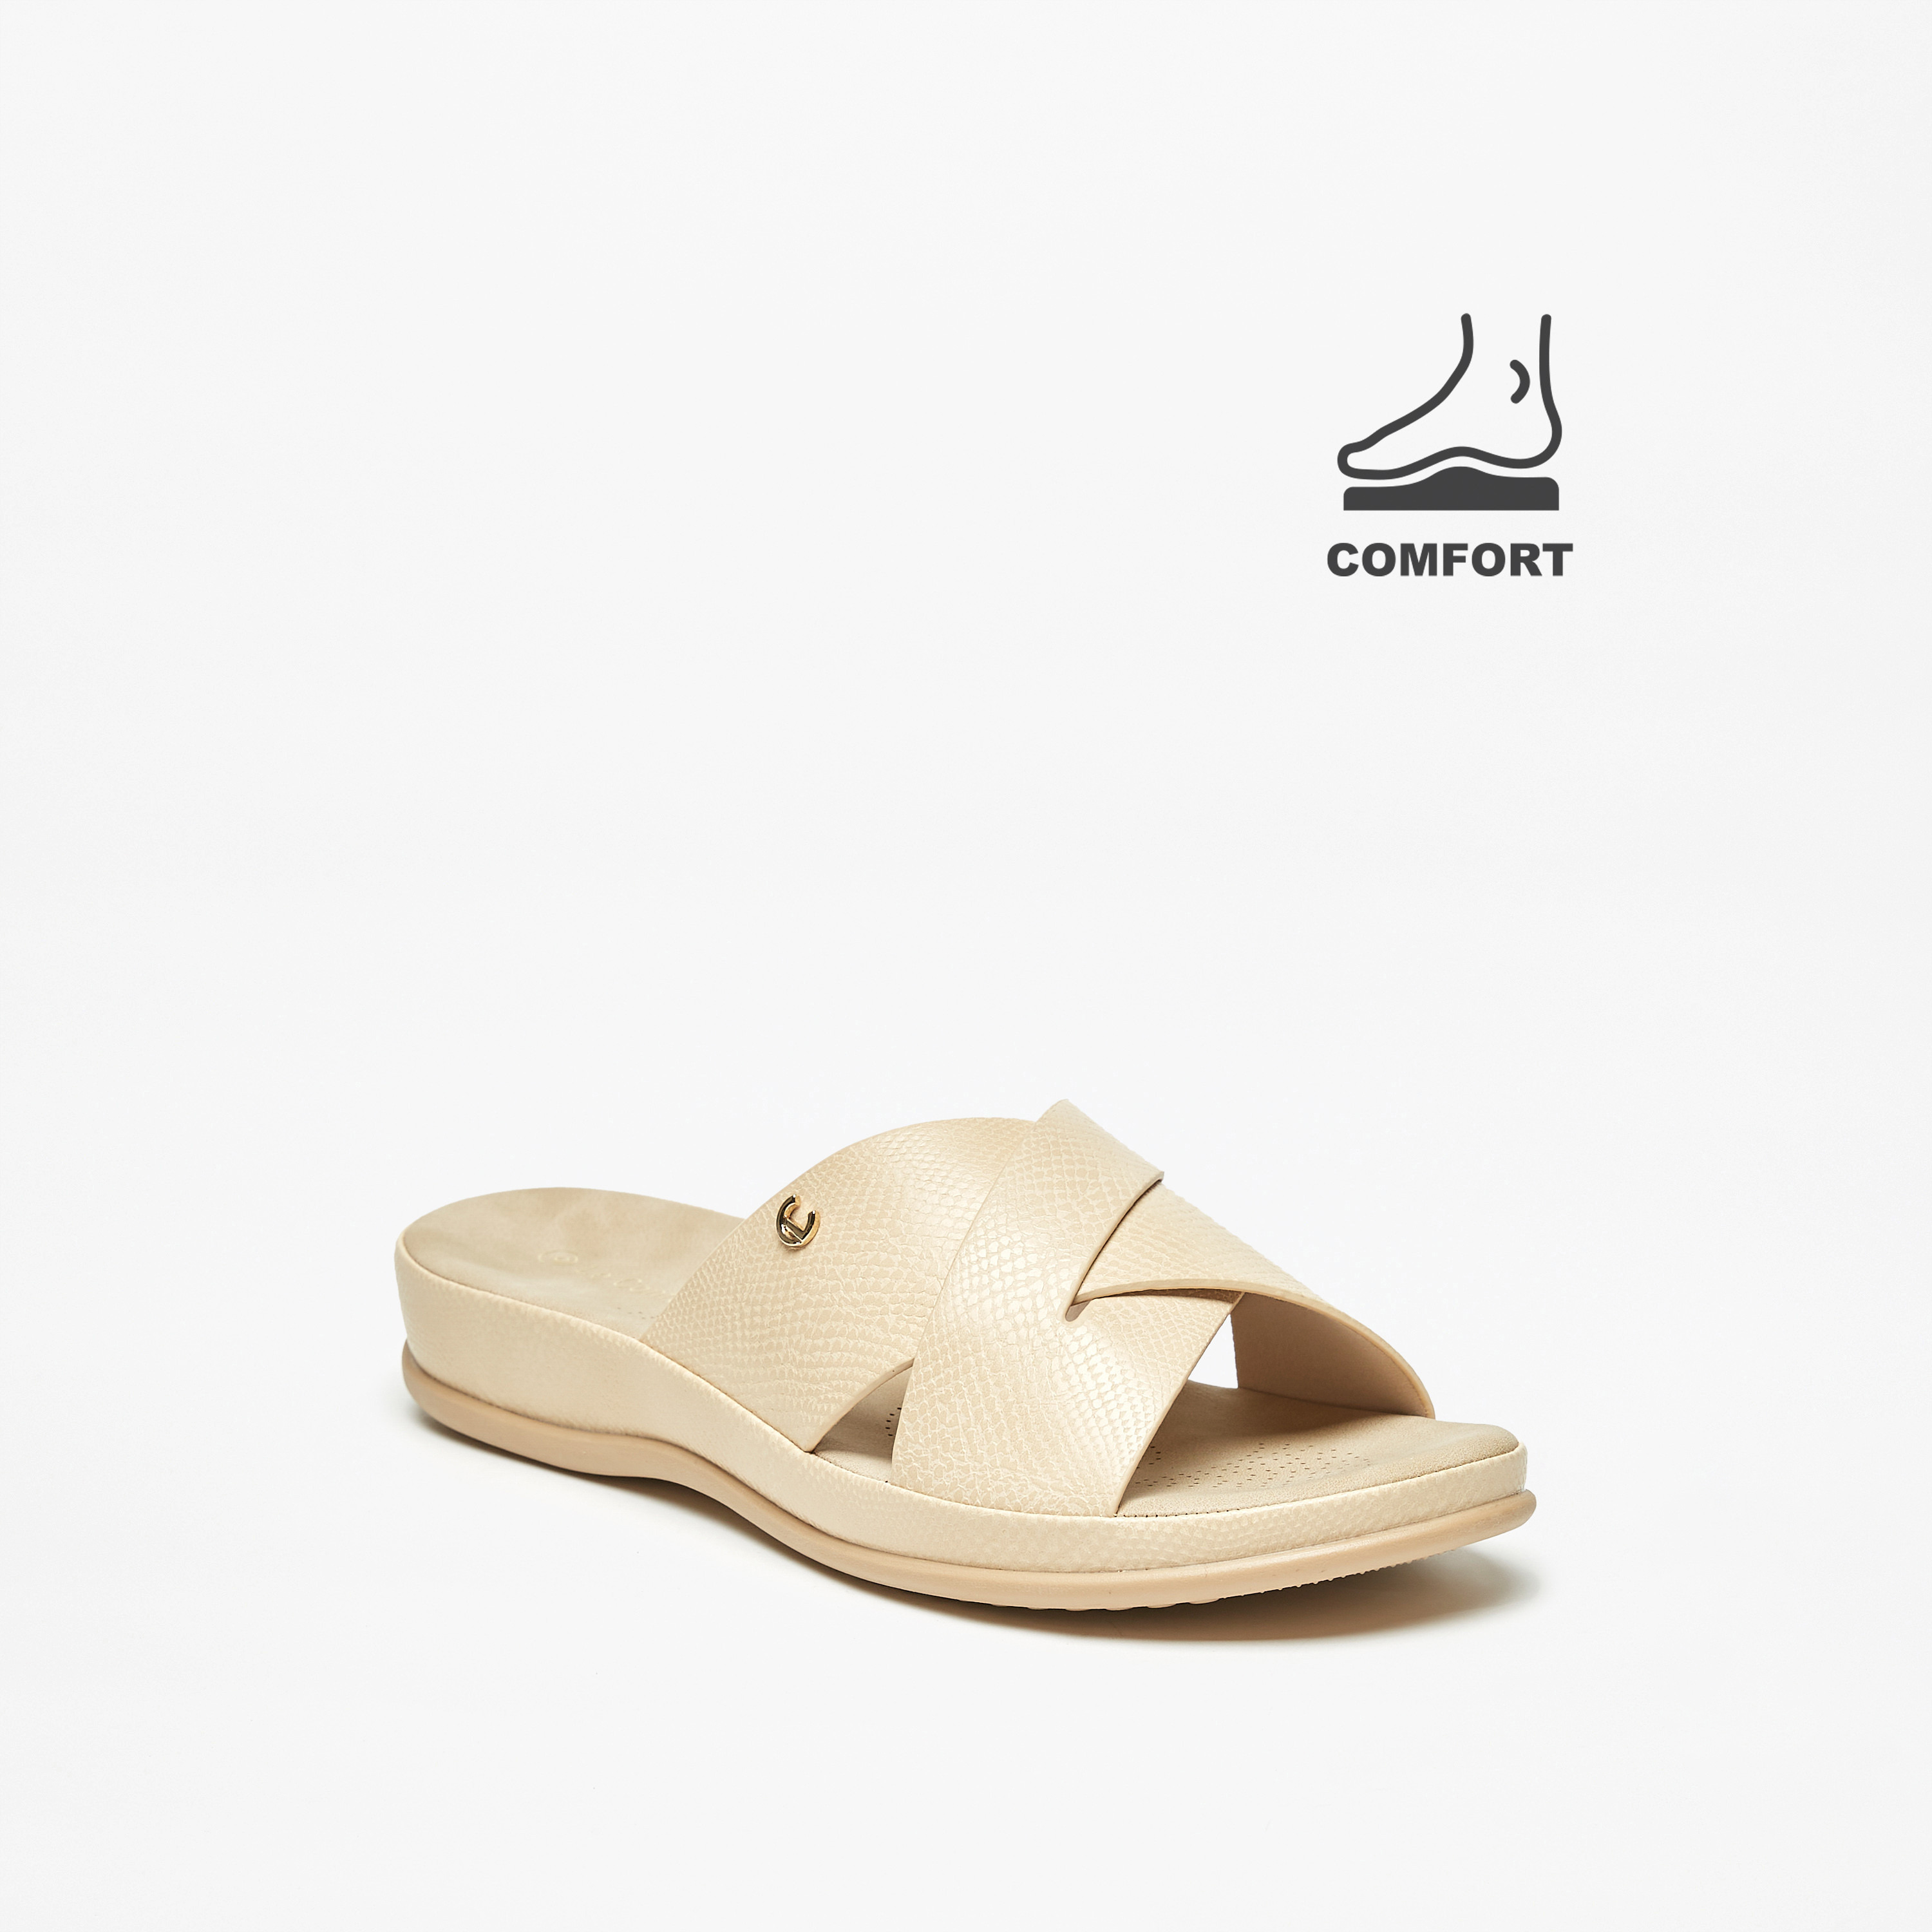 Shop Woven Strap Flat Sandals Online | R&B UAE